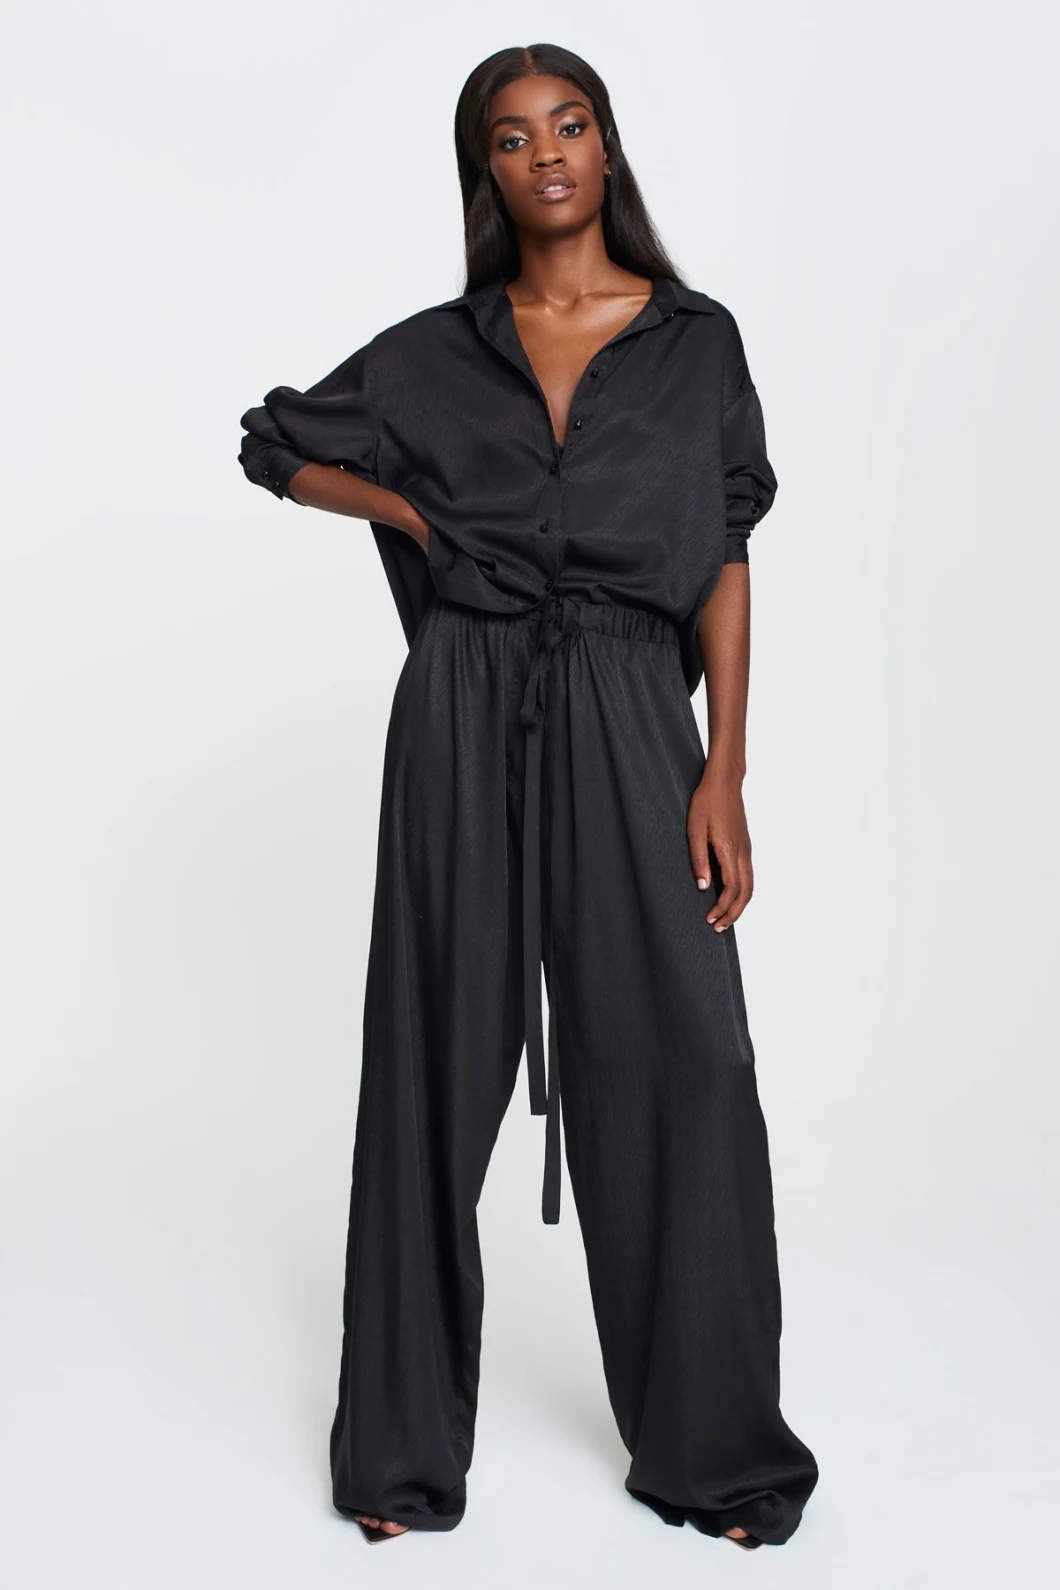 New Apparel Suit Women Fashion Clothing Oversized Satin Pajamas